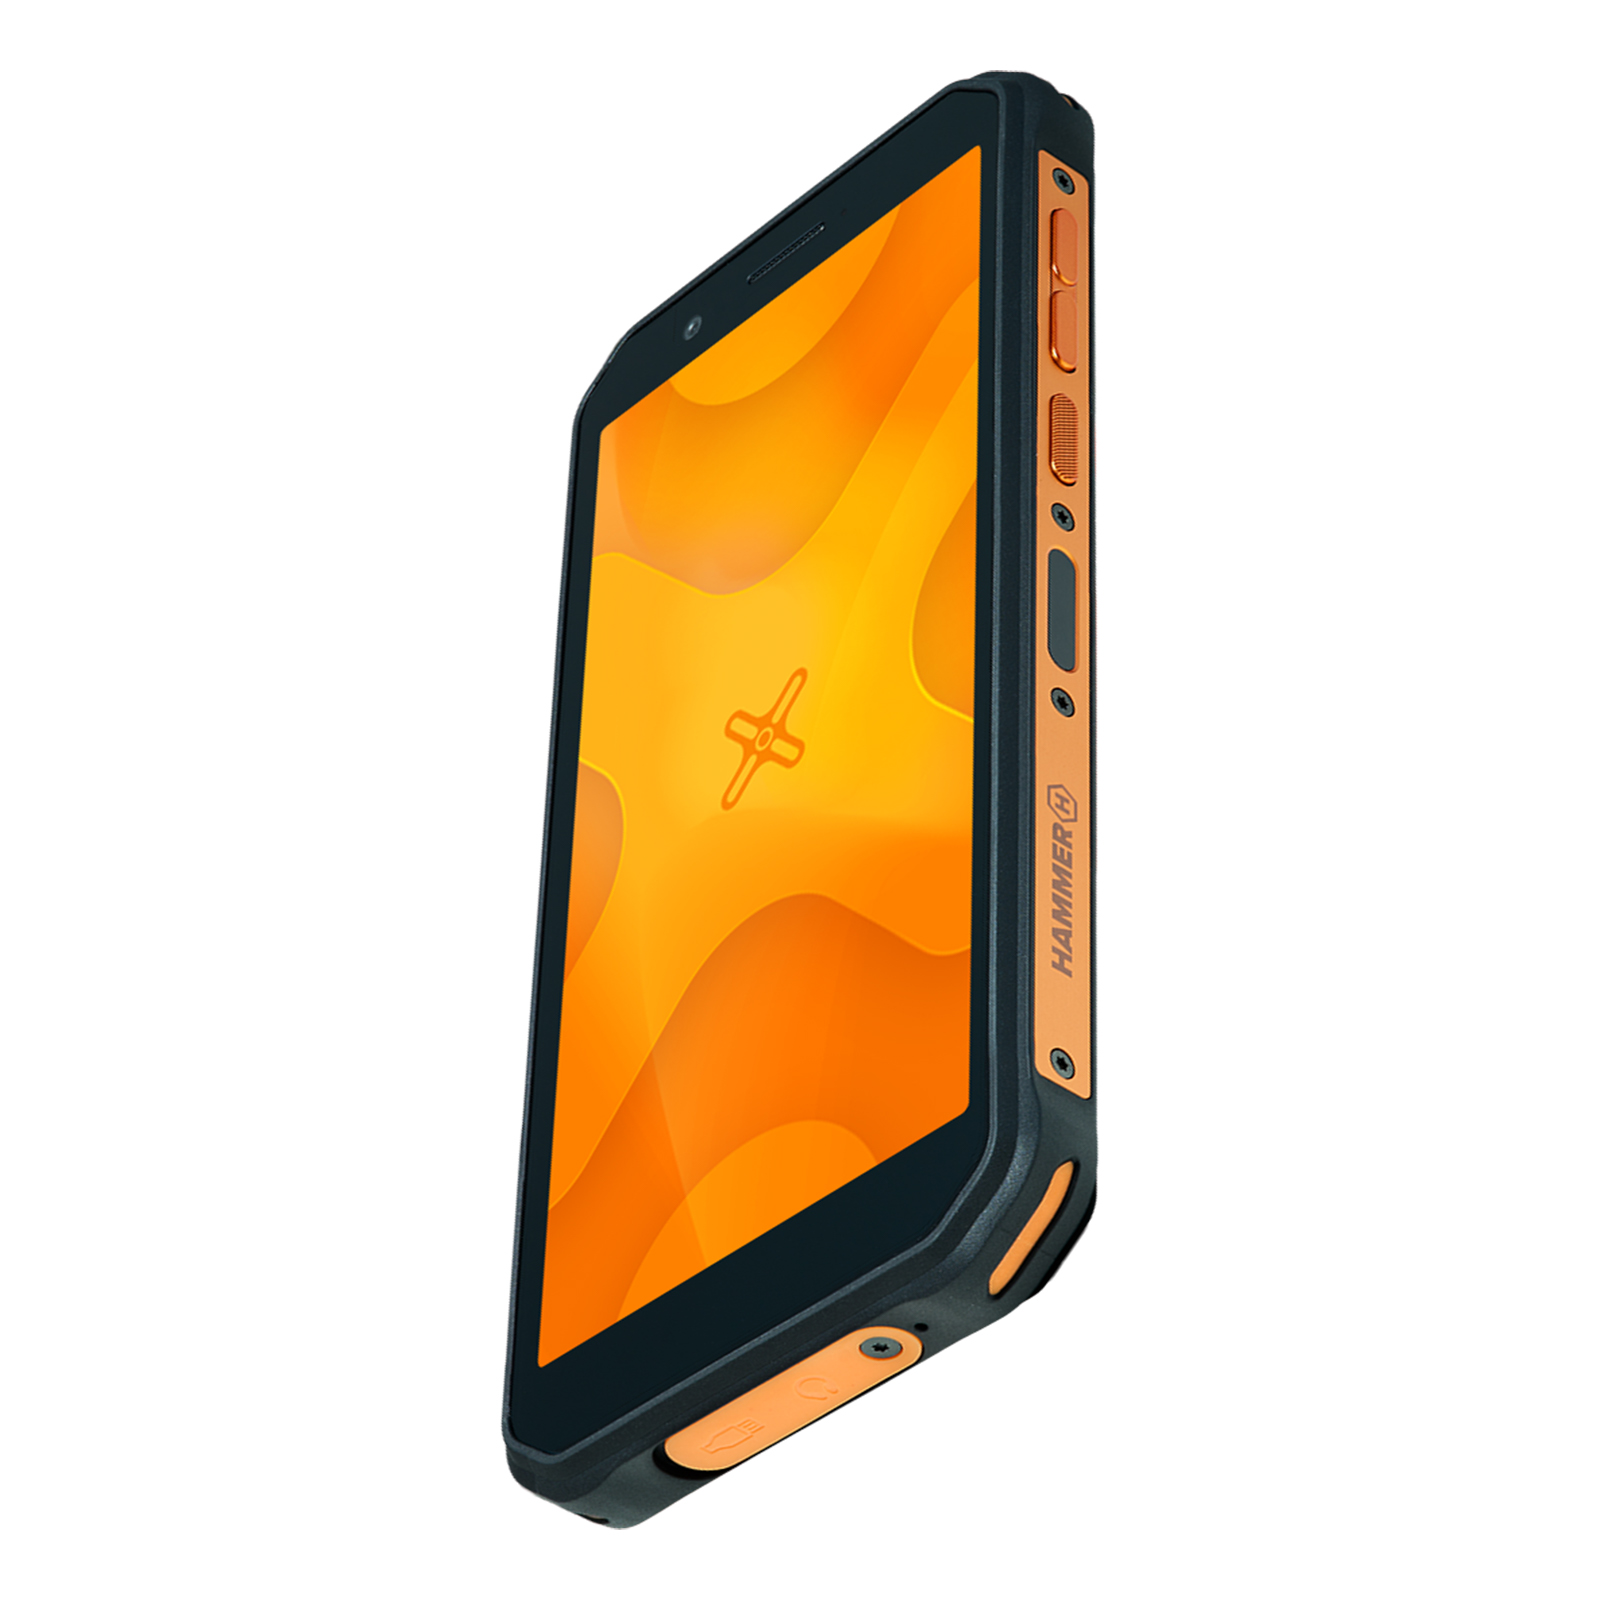 64 Energy X HAMMER Orange LTE Dual SIM GB 4G